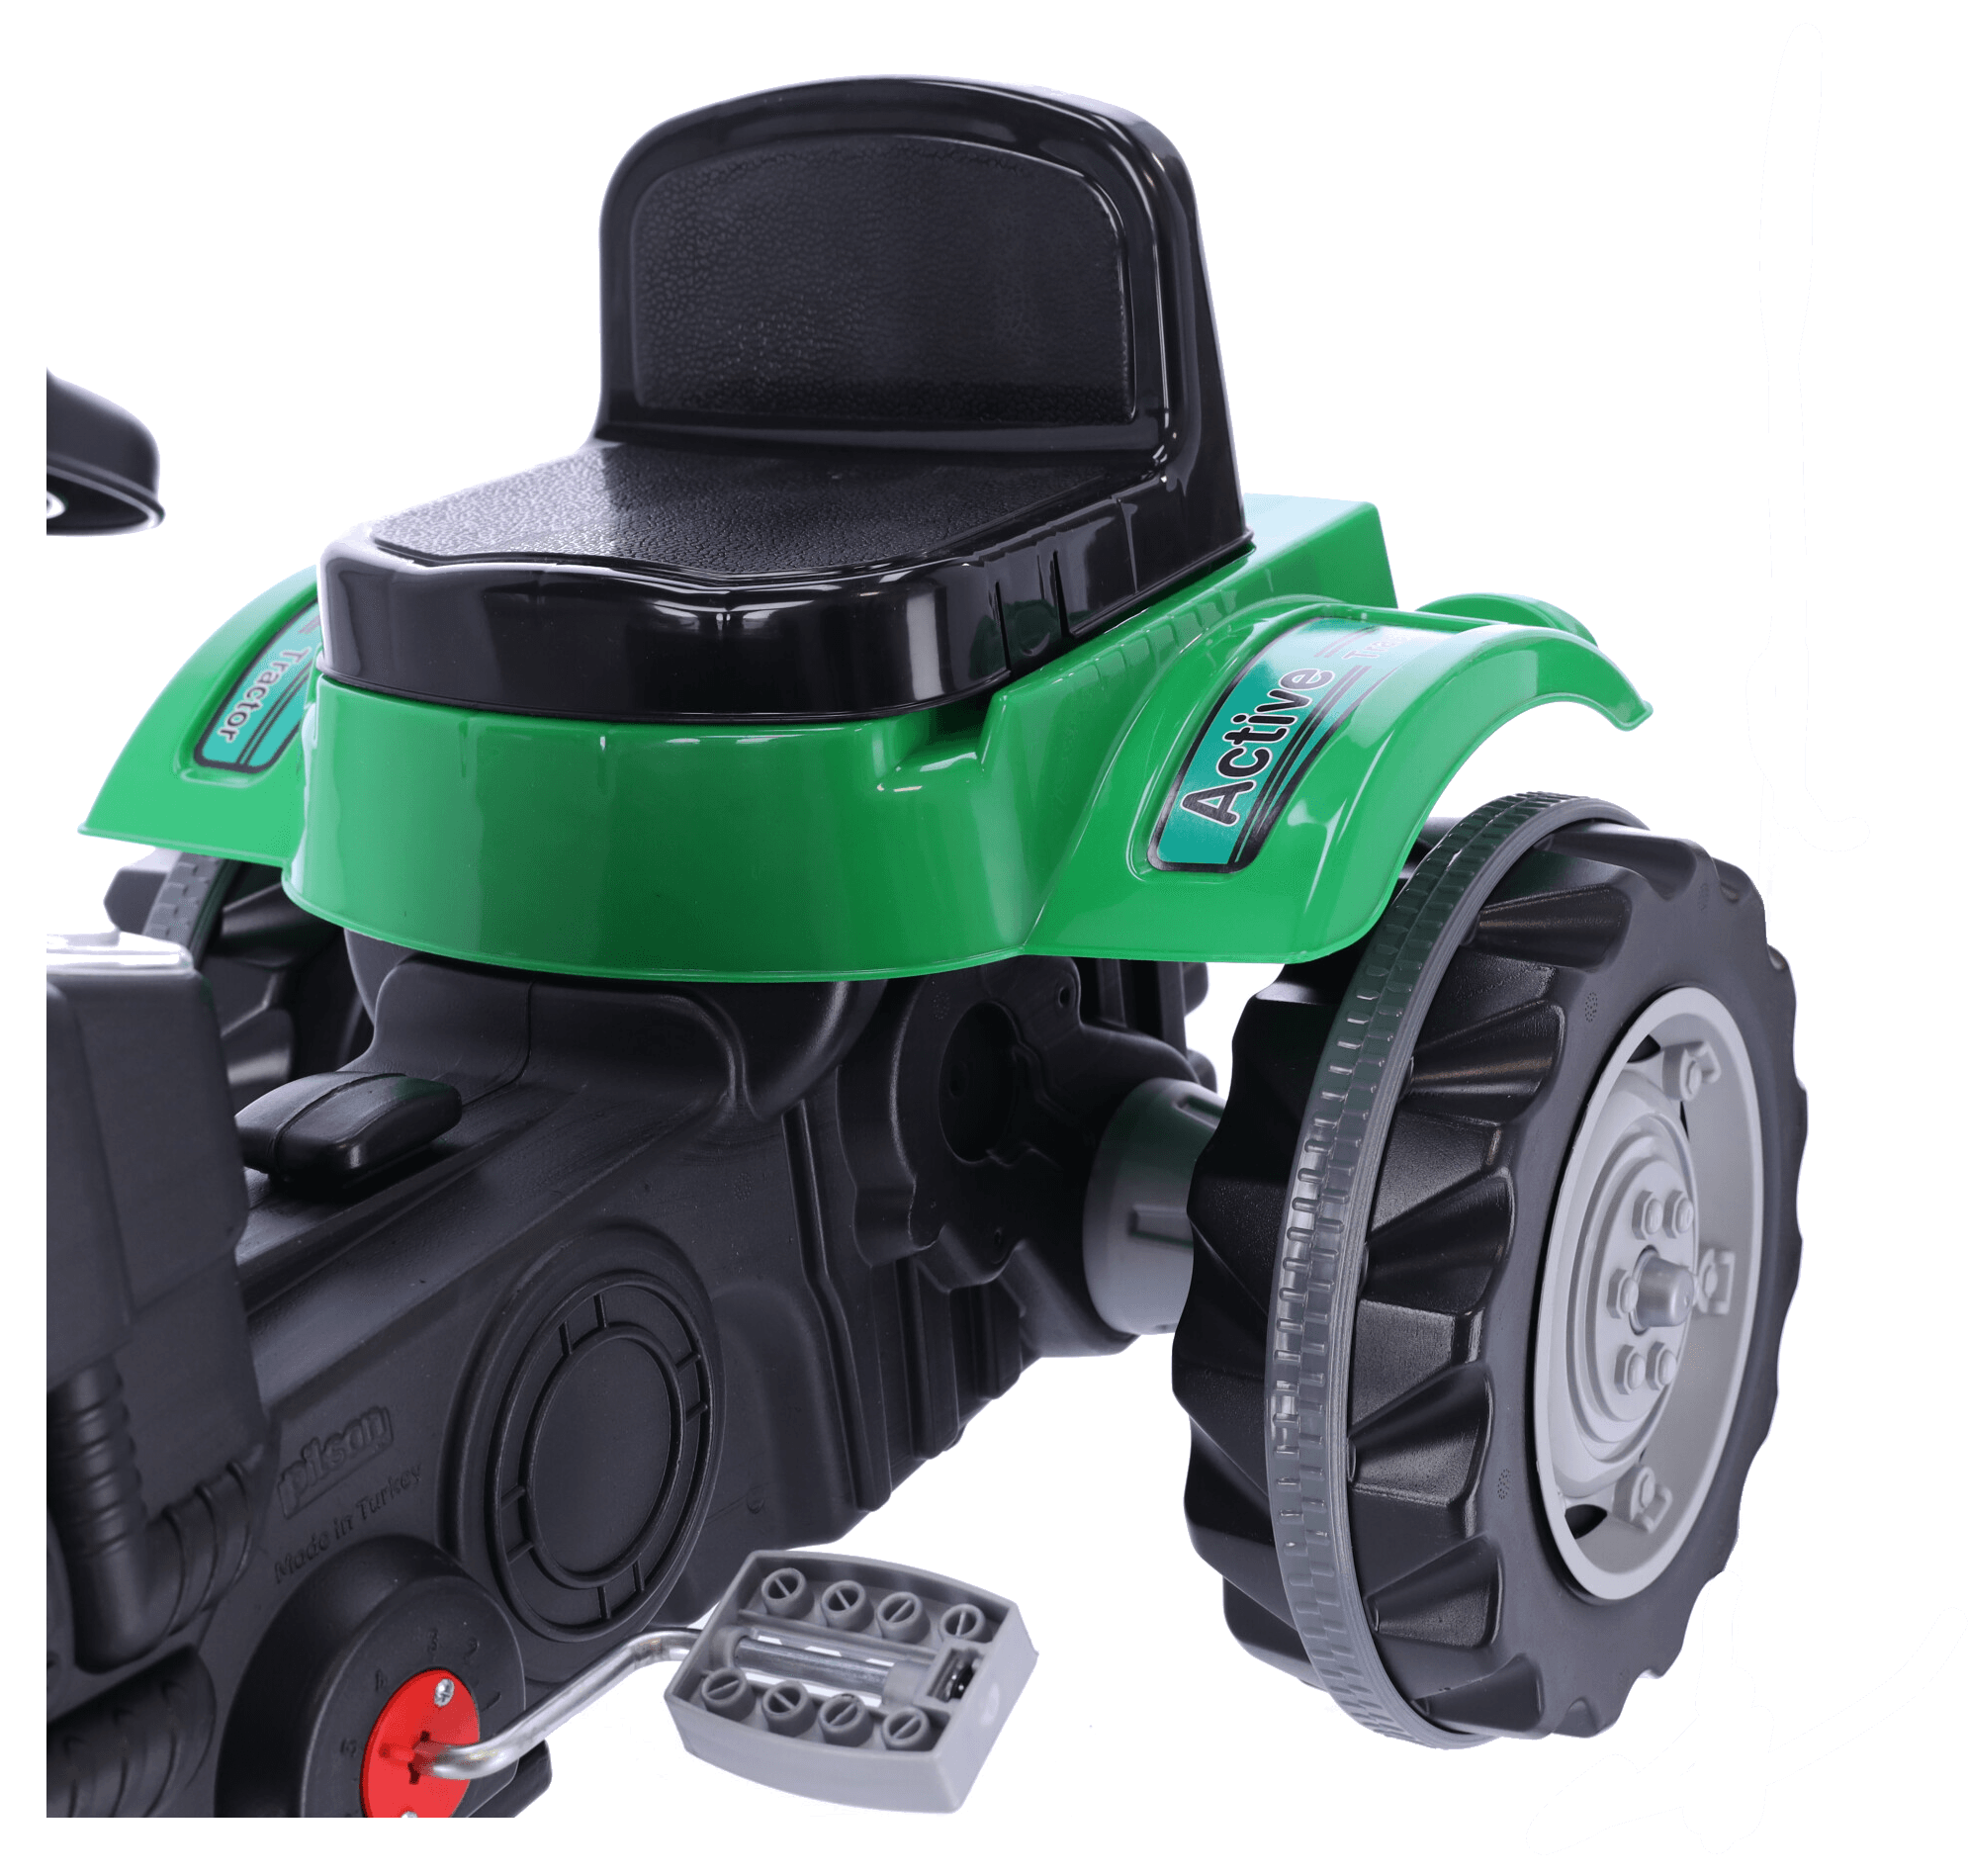 Children's tractor green PILSAN